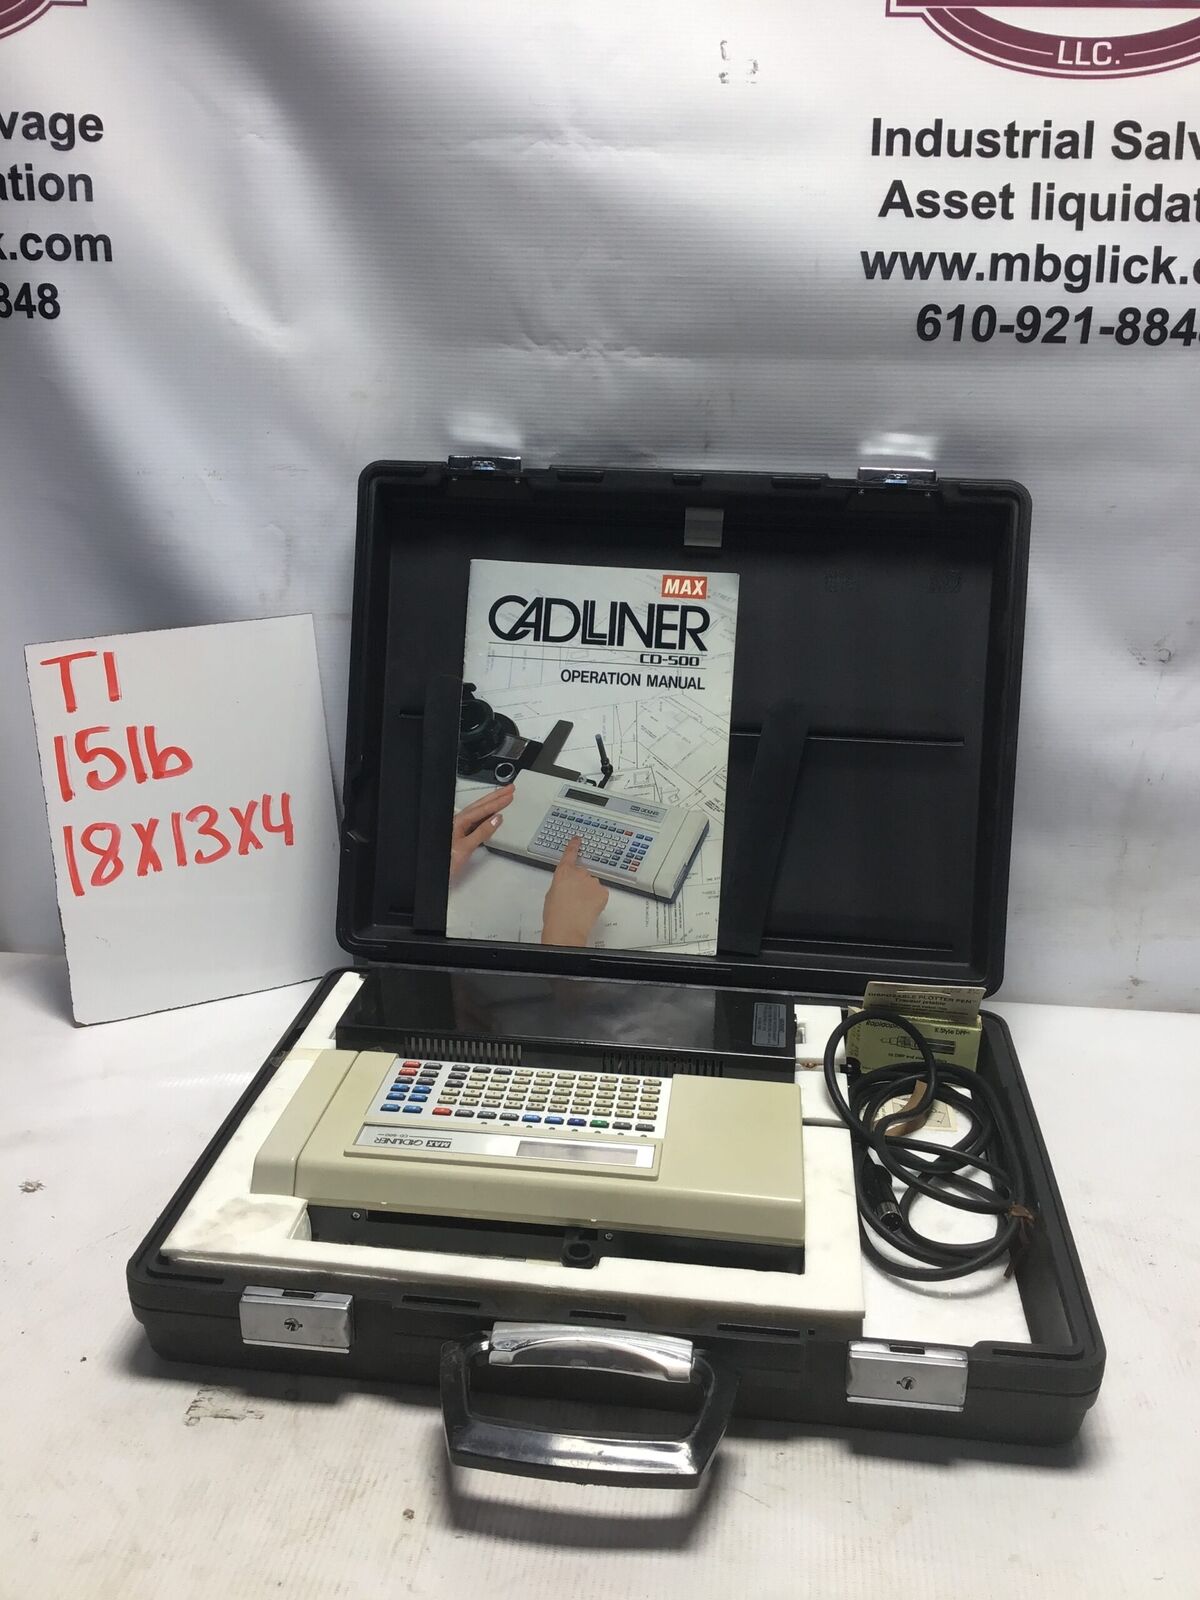 Max Cadliner CD-500 Plotter Scribber with briefcase